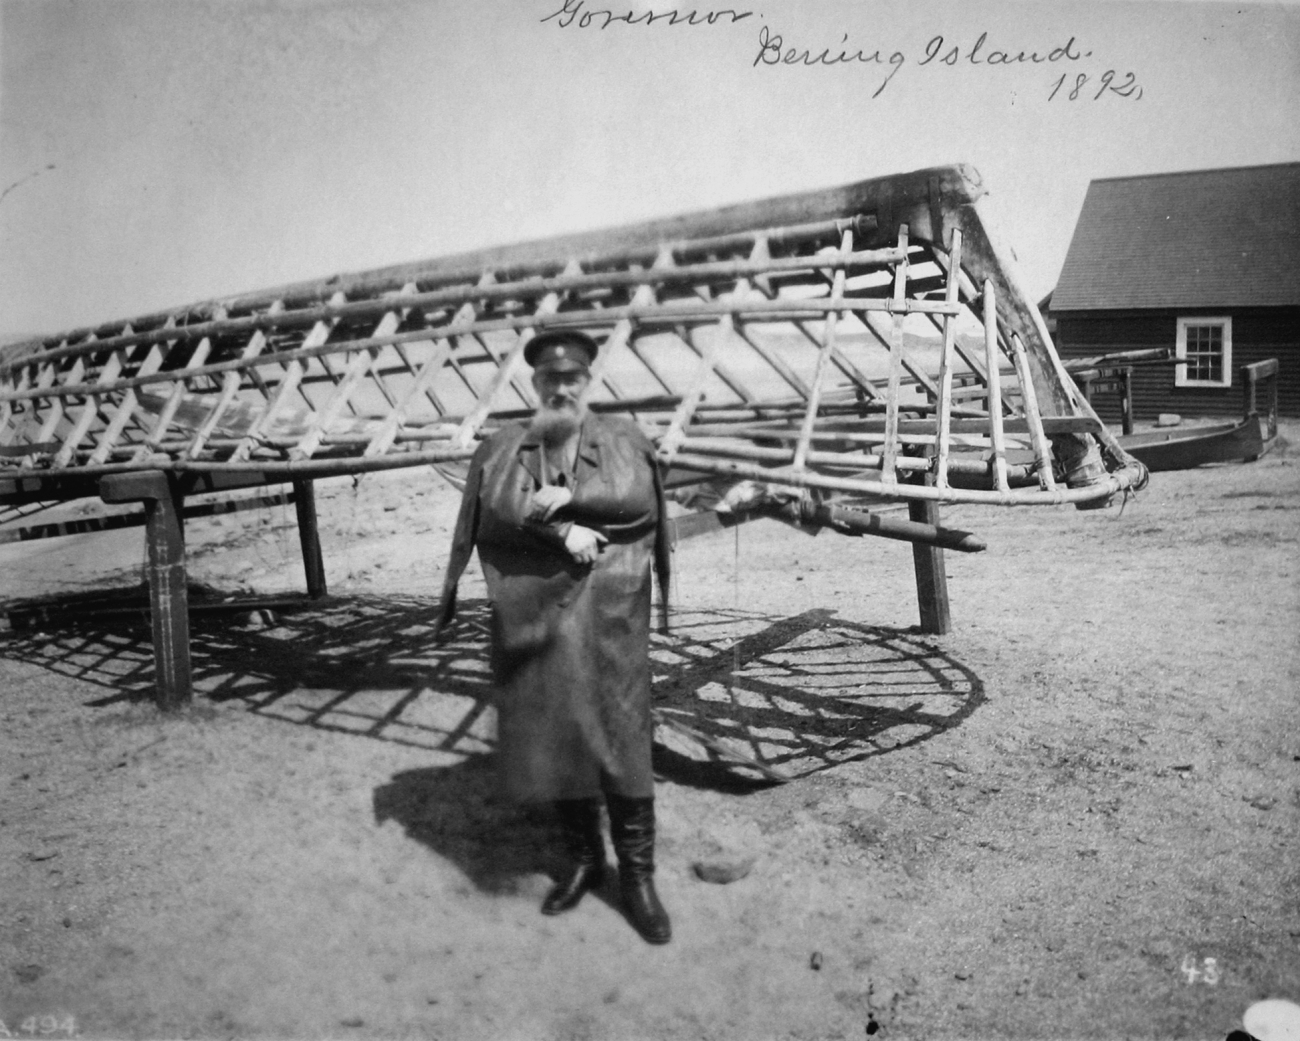 Governor, Bering Island, 1892